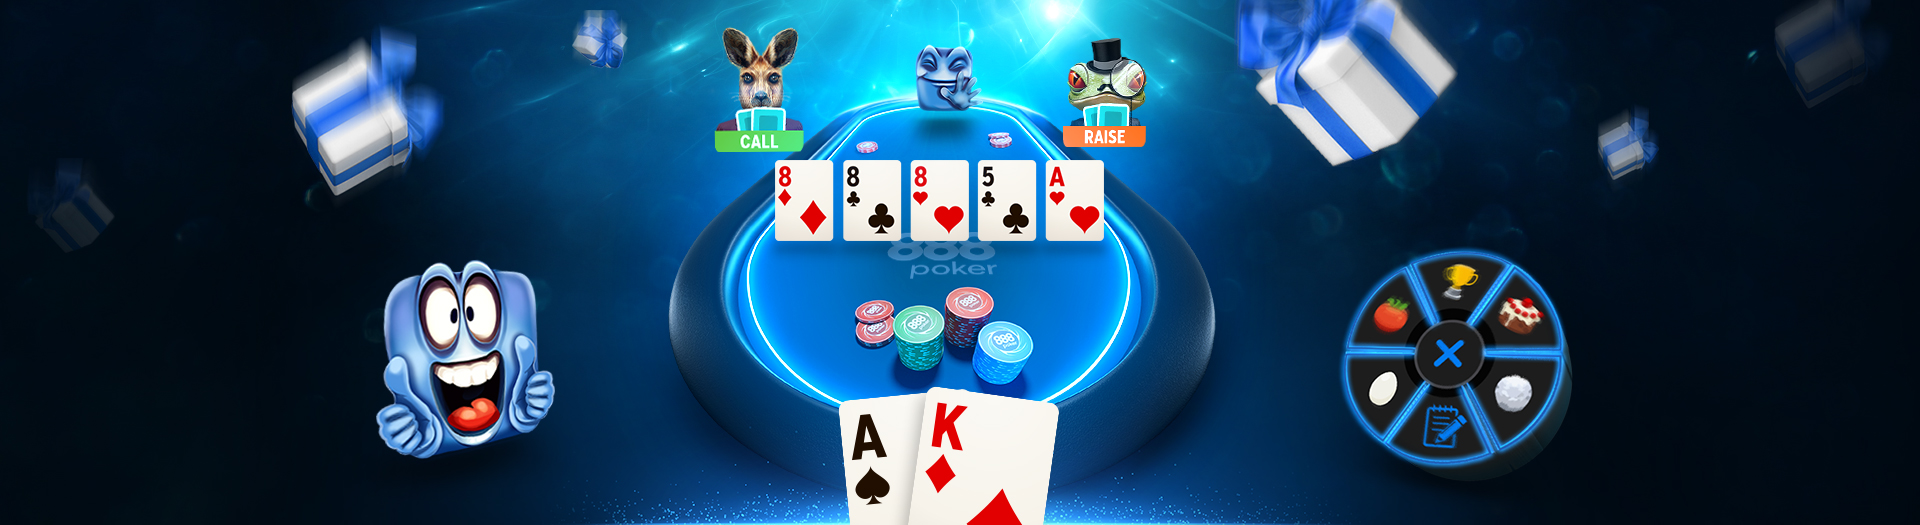 TS-43644-Poker-8-Launch-LP-image-1600767511450_tcm1966-497727